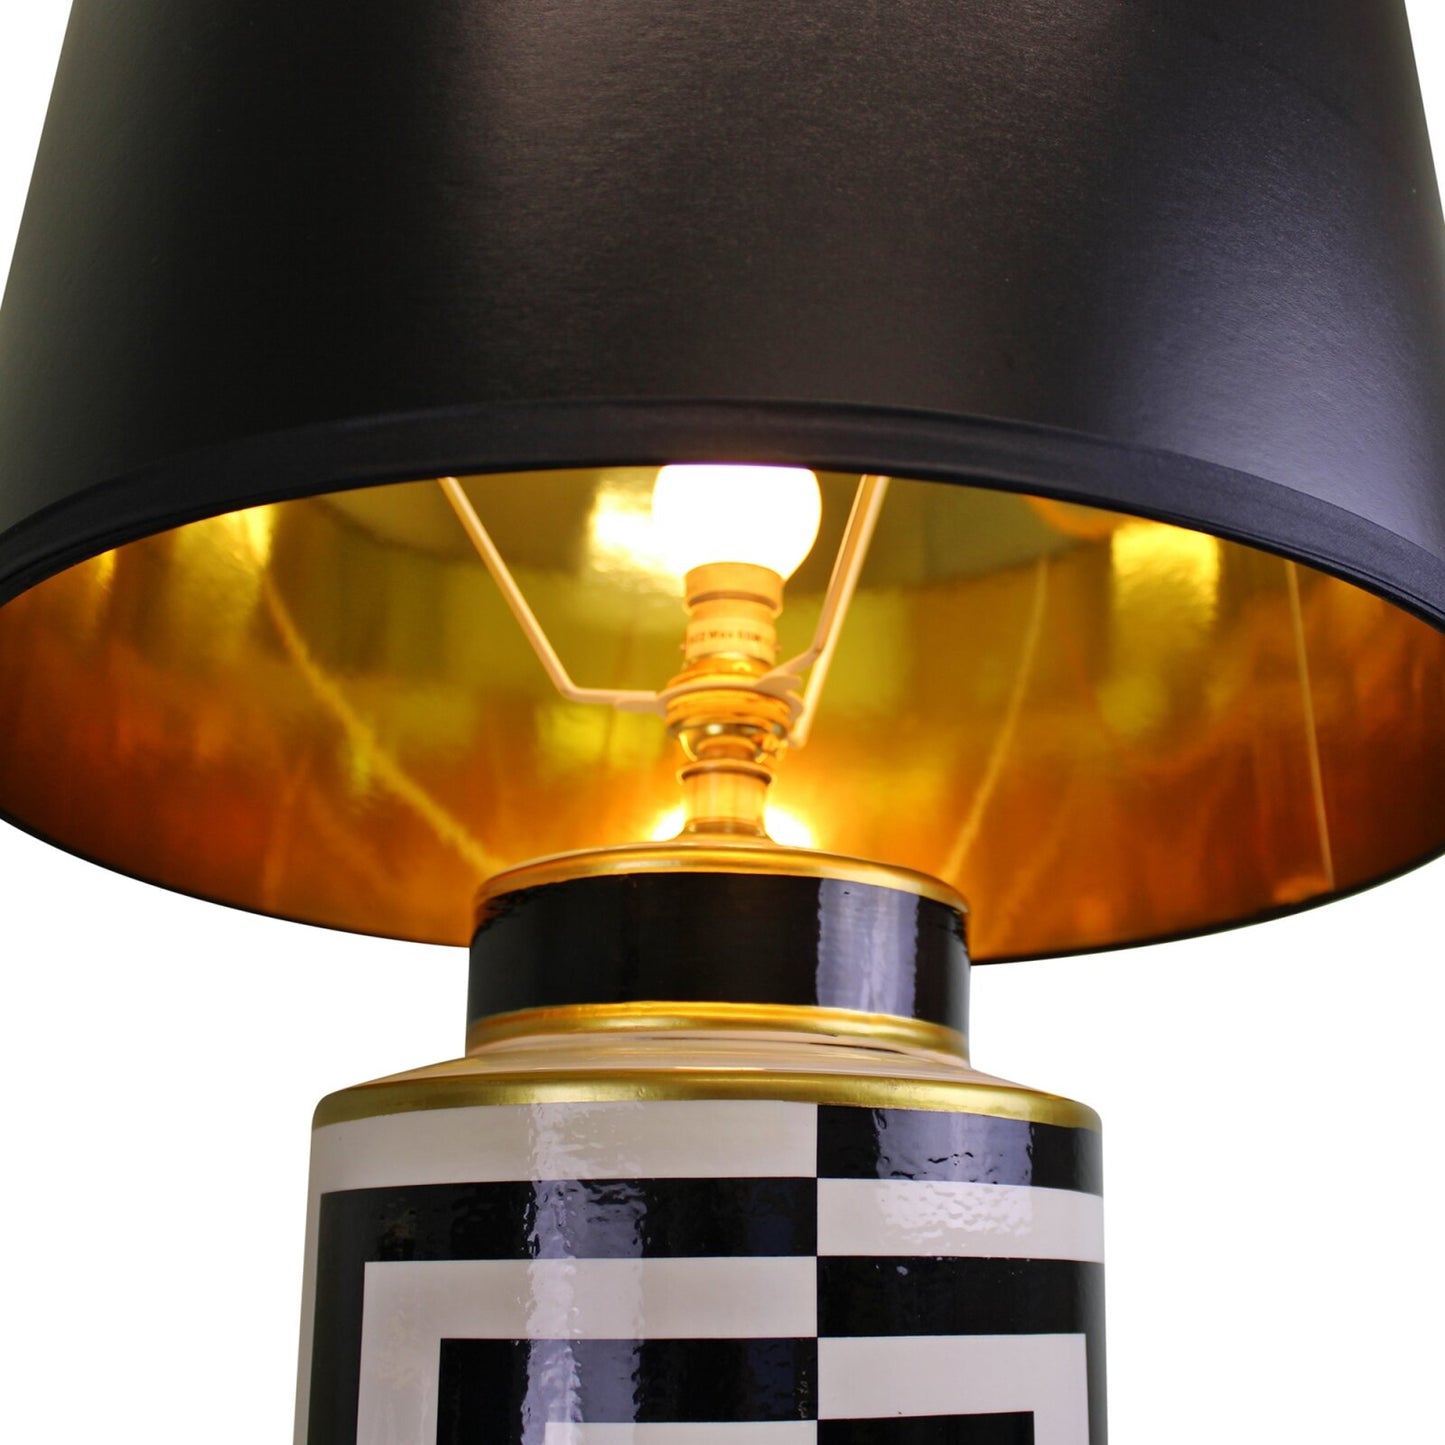 Black/White/Gold Ceramic Lamp, Geometric Design 66cm